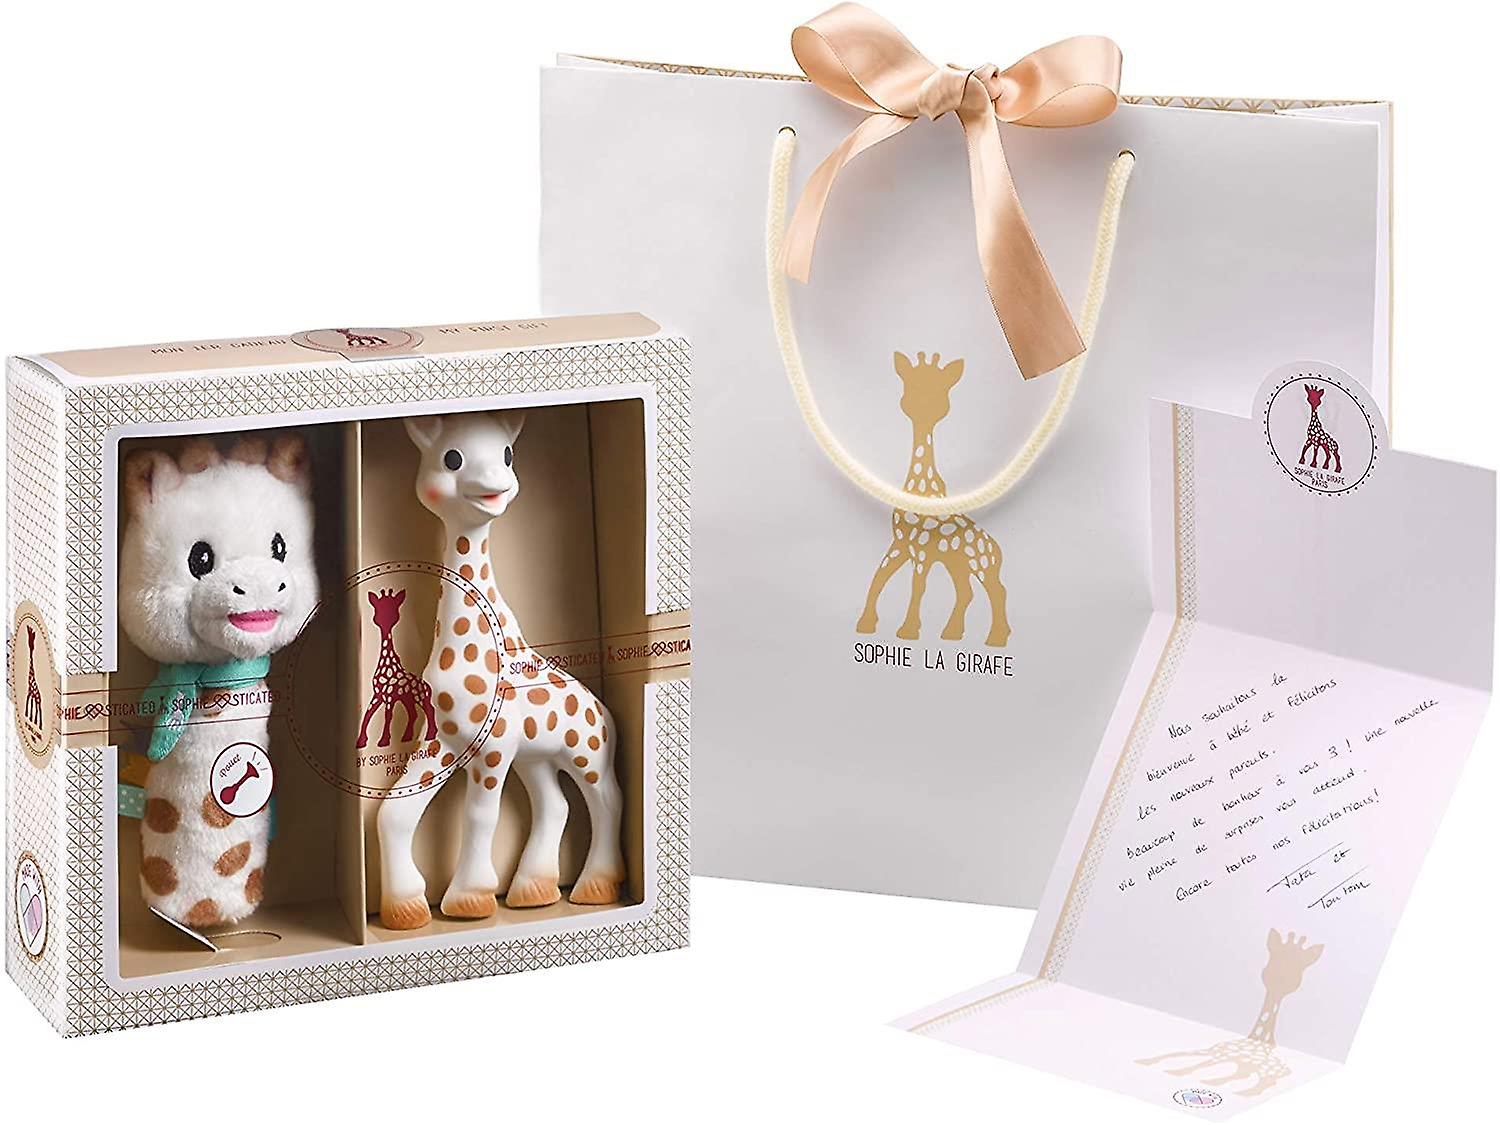 Sophie la Girafe Sophie-sticated gift set